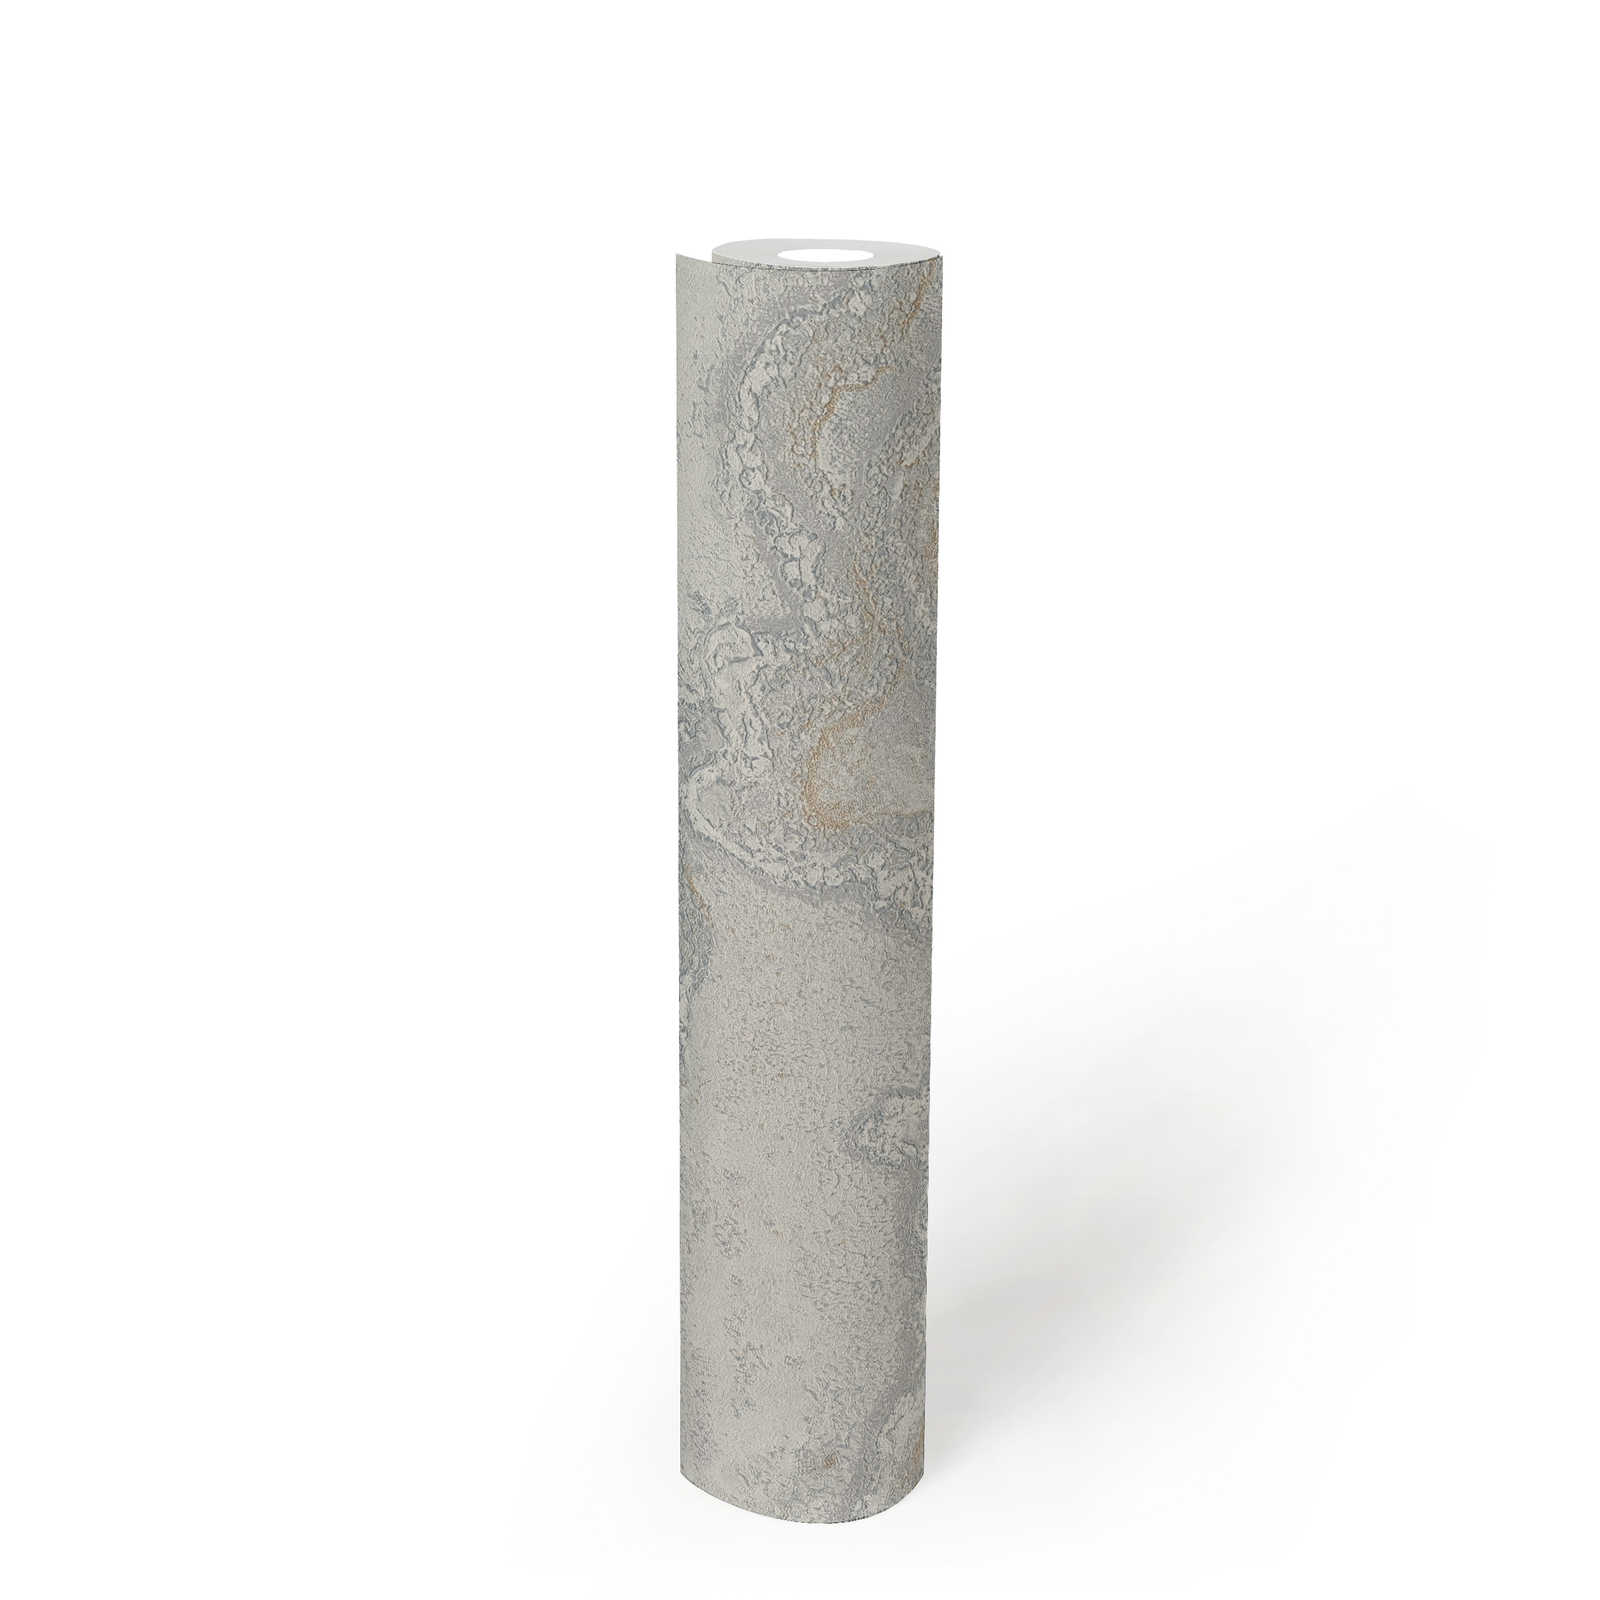             Vliestapete mit Marmor Bemusterung – Grau, Silber, Gold
        